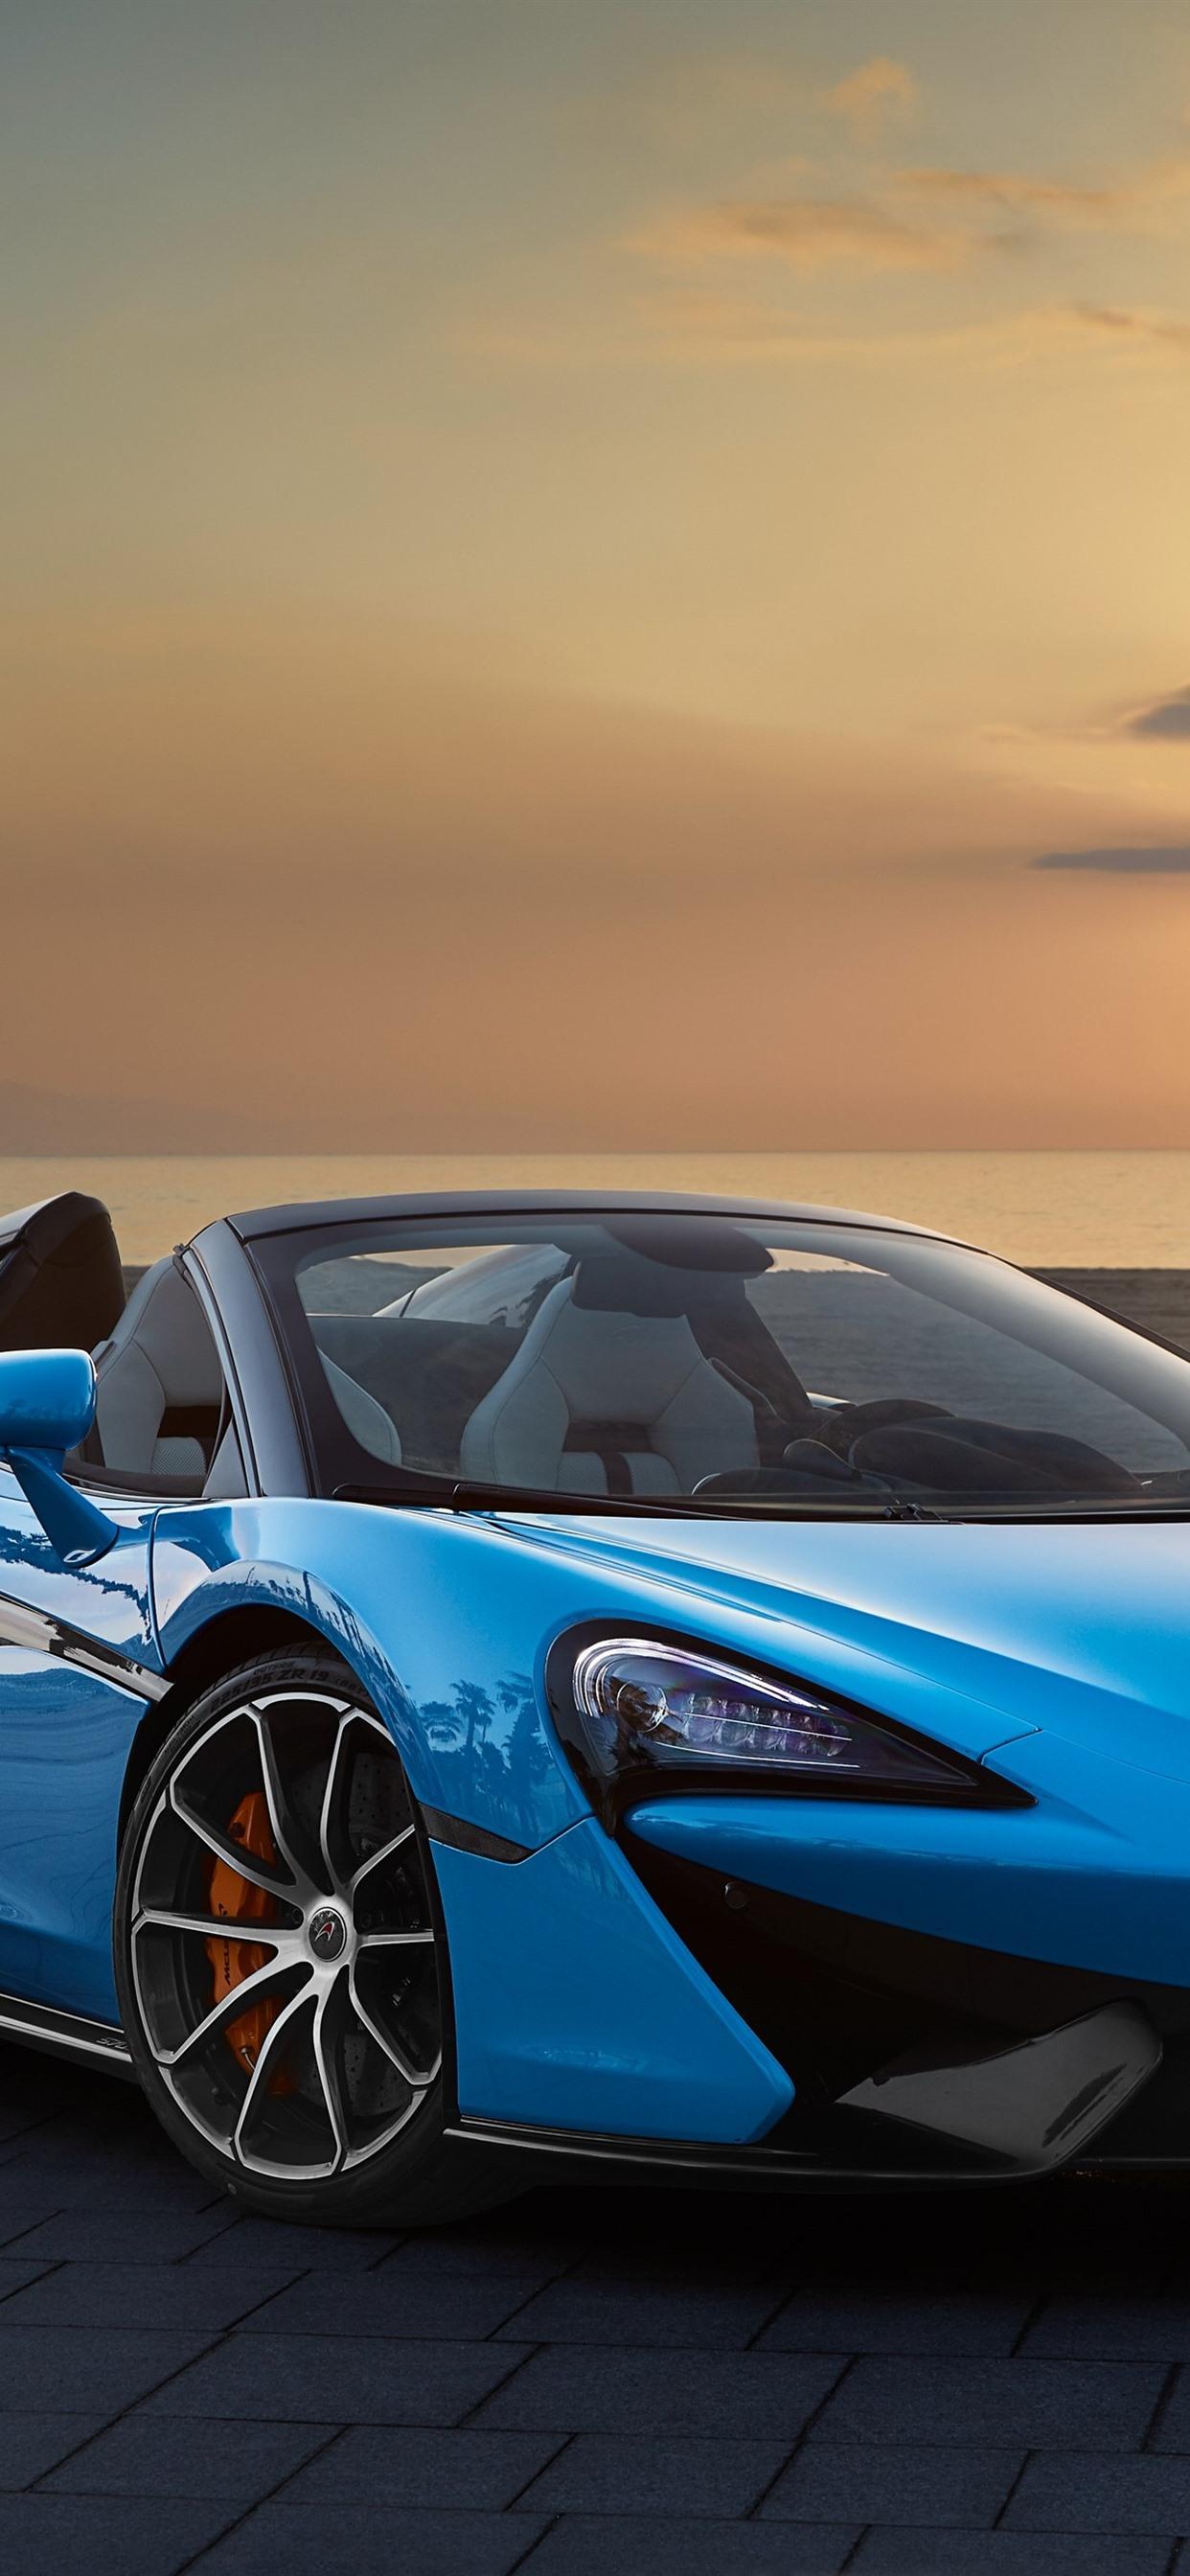 McLaren 570S blue convertible, sunset, sea 1242x2688 iPhone